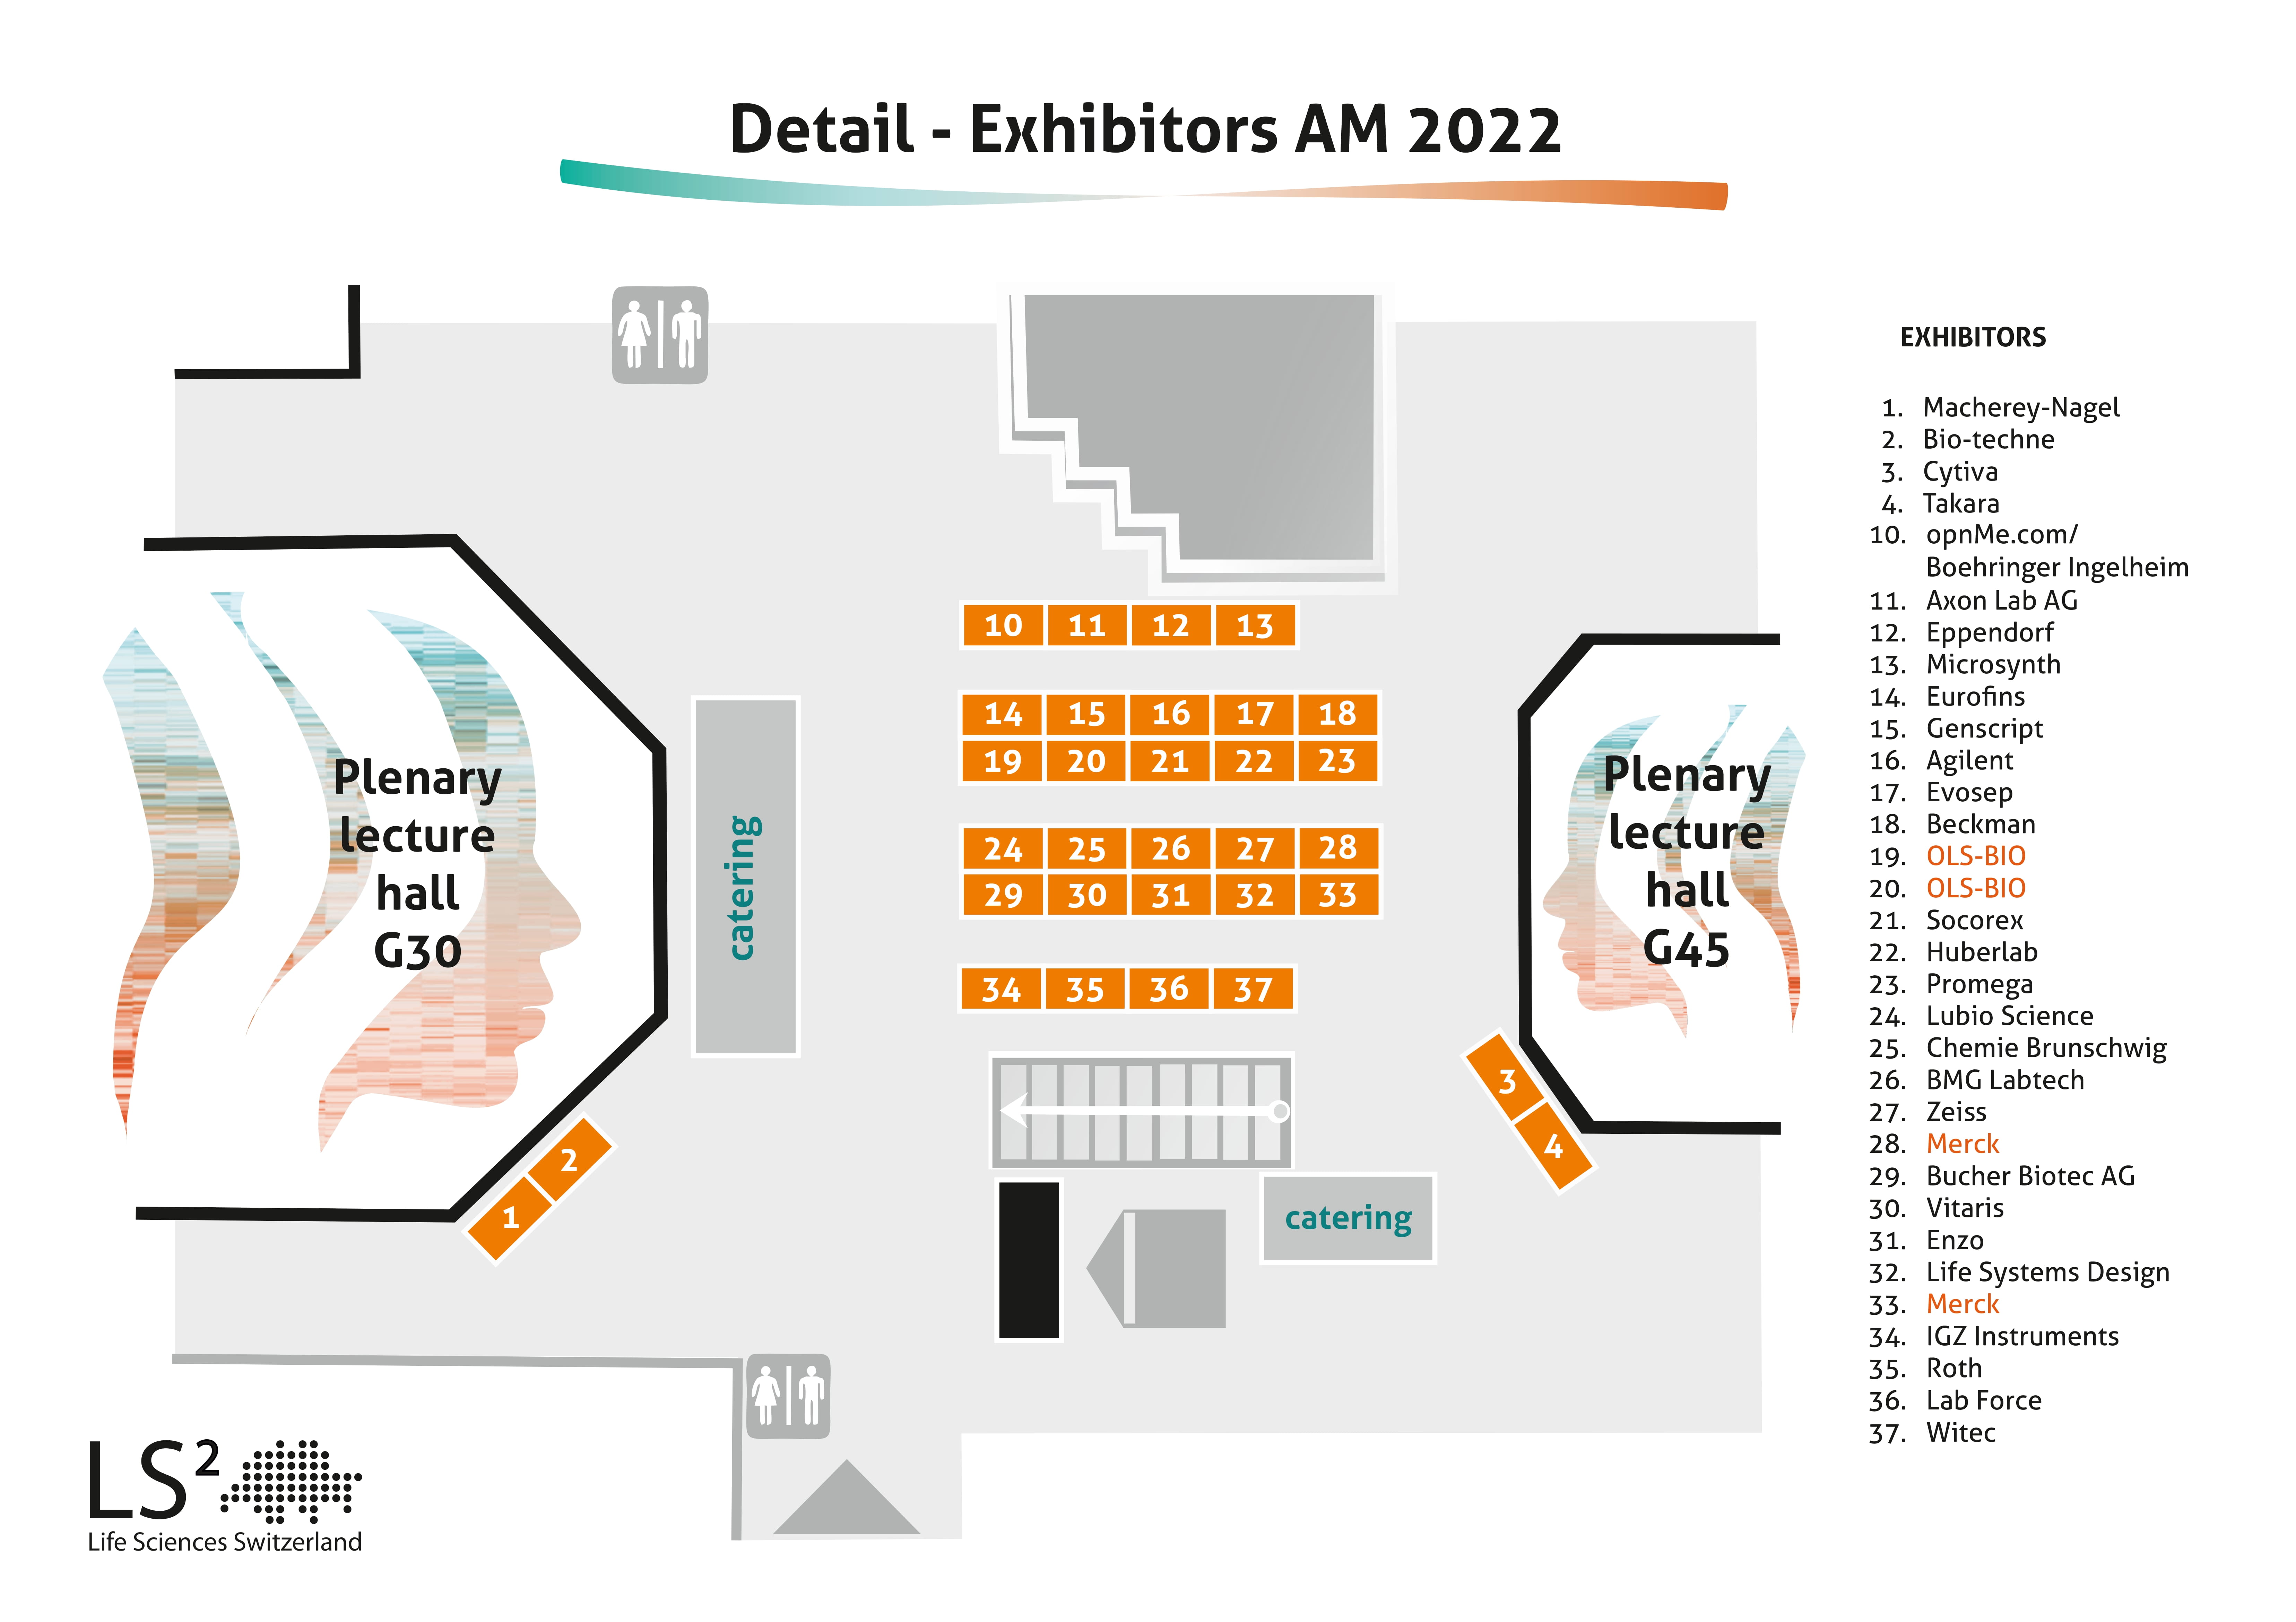 floorplan-am22-exhibitors-detail-a1-1.jpg